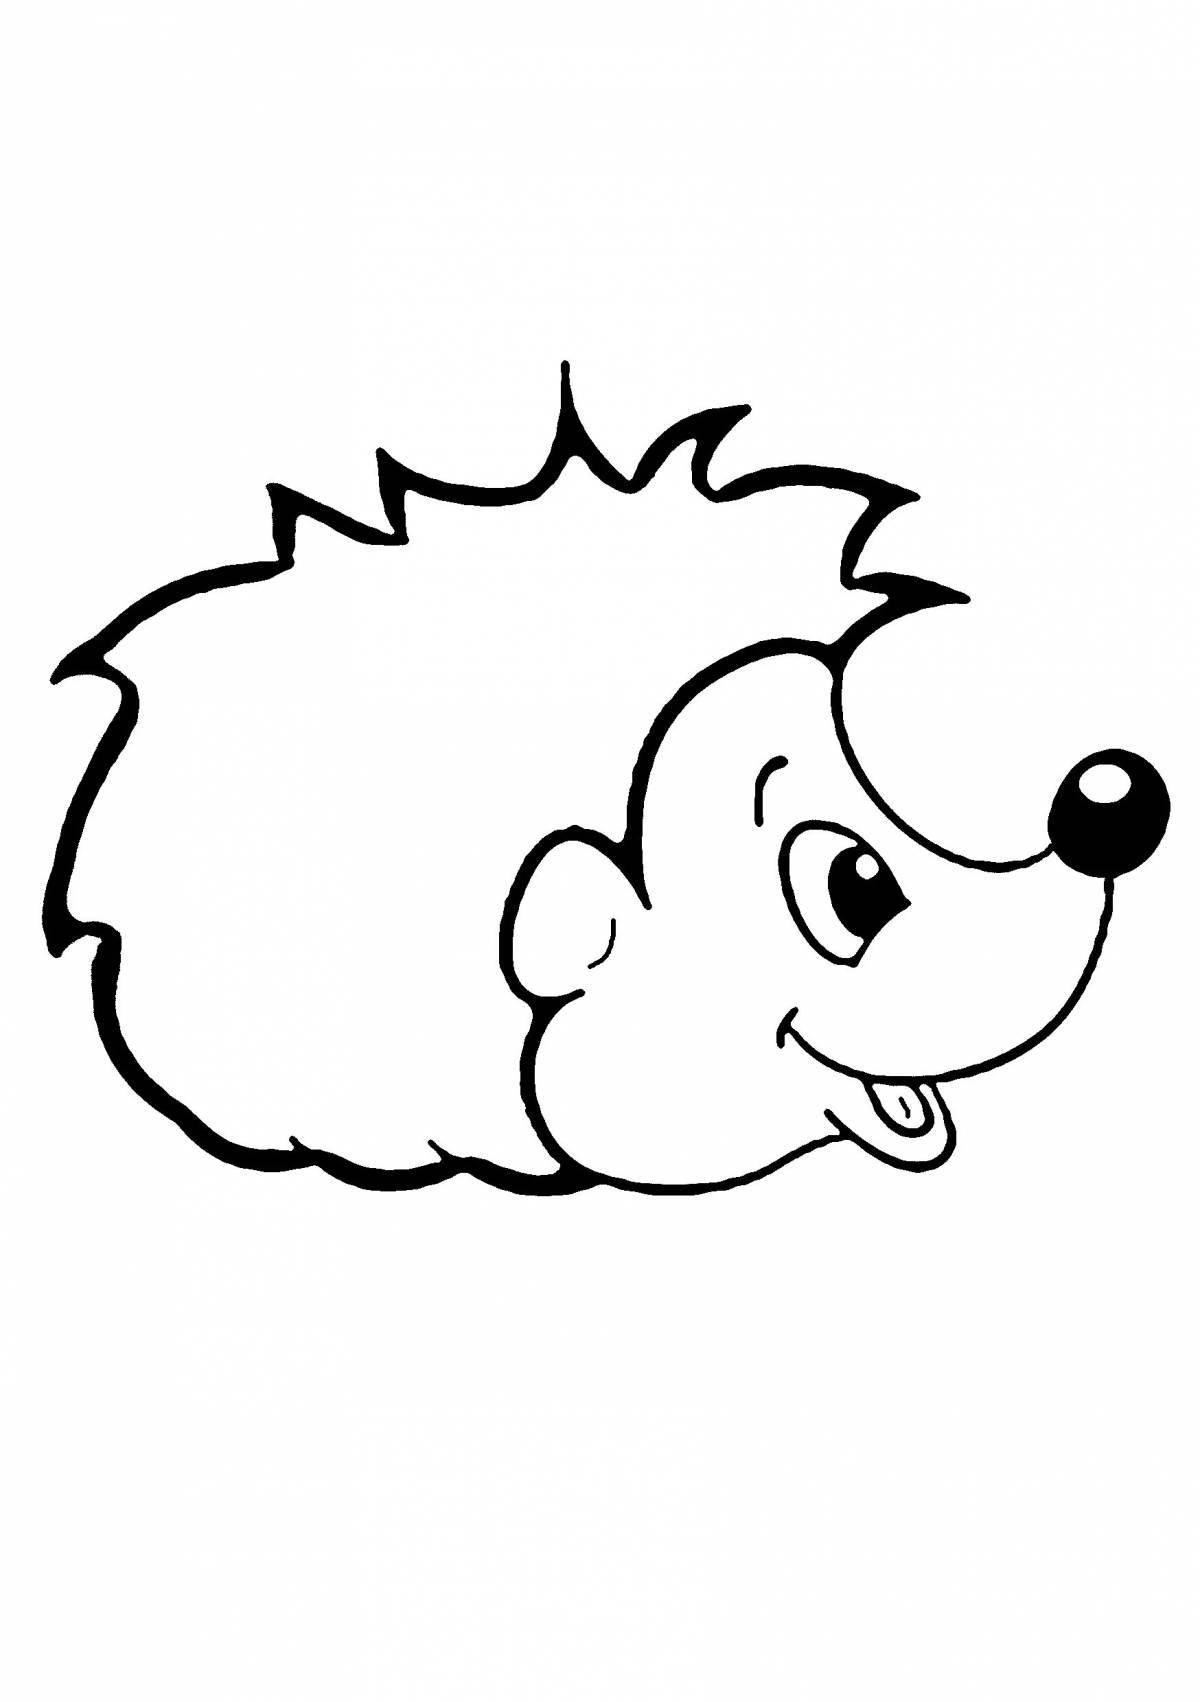 Animated hedgehog coloring book for preschoolers